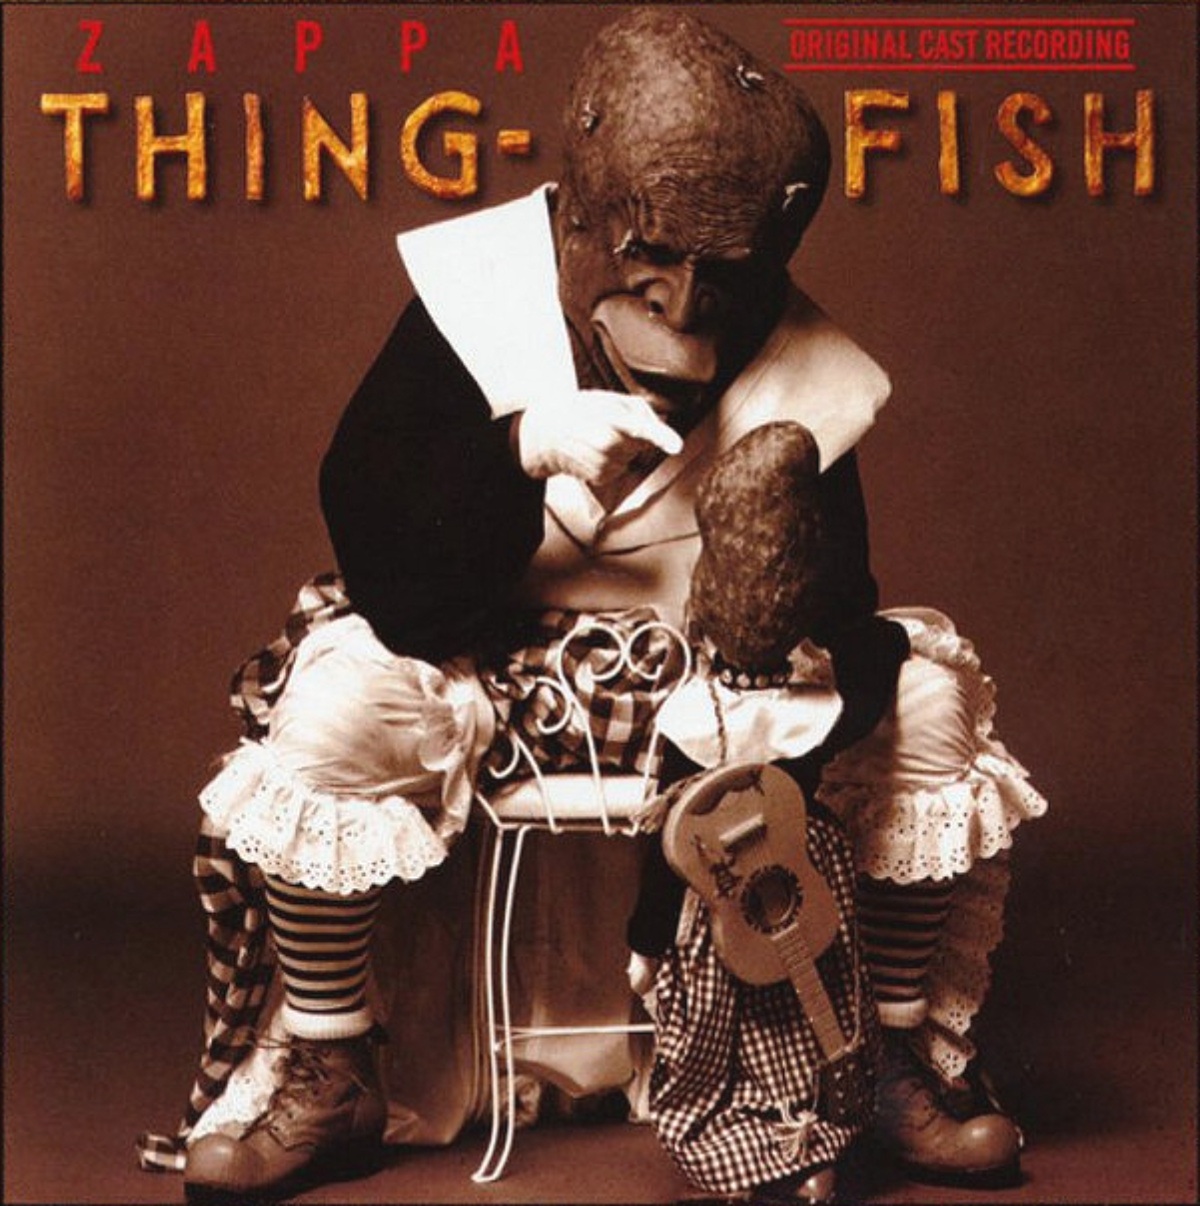 Frank Zappa: Thing-Fish (album cover)